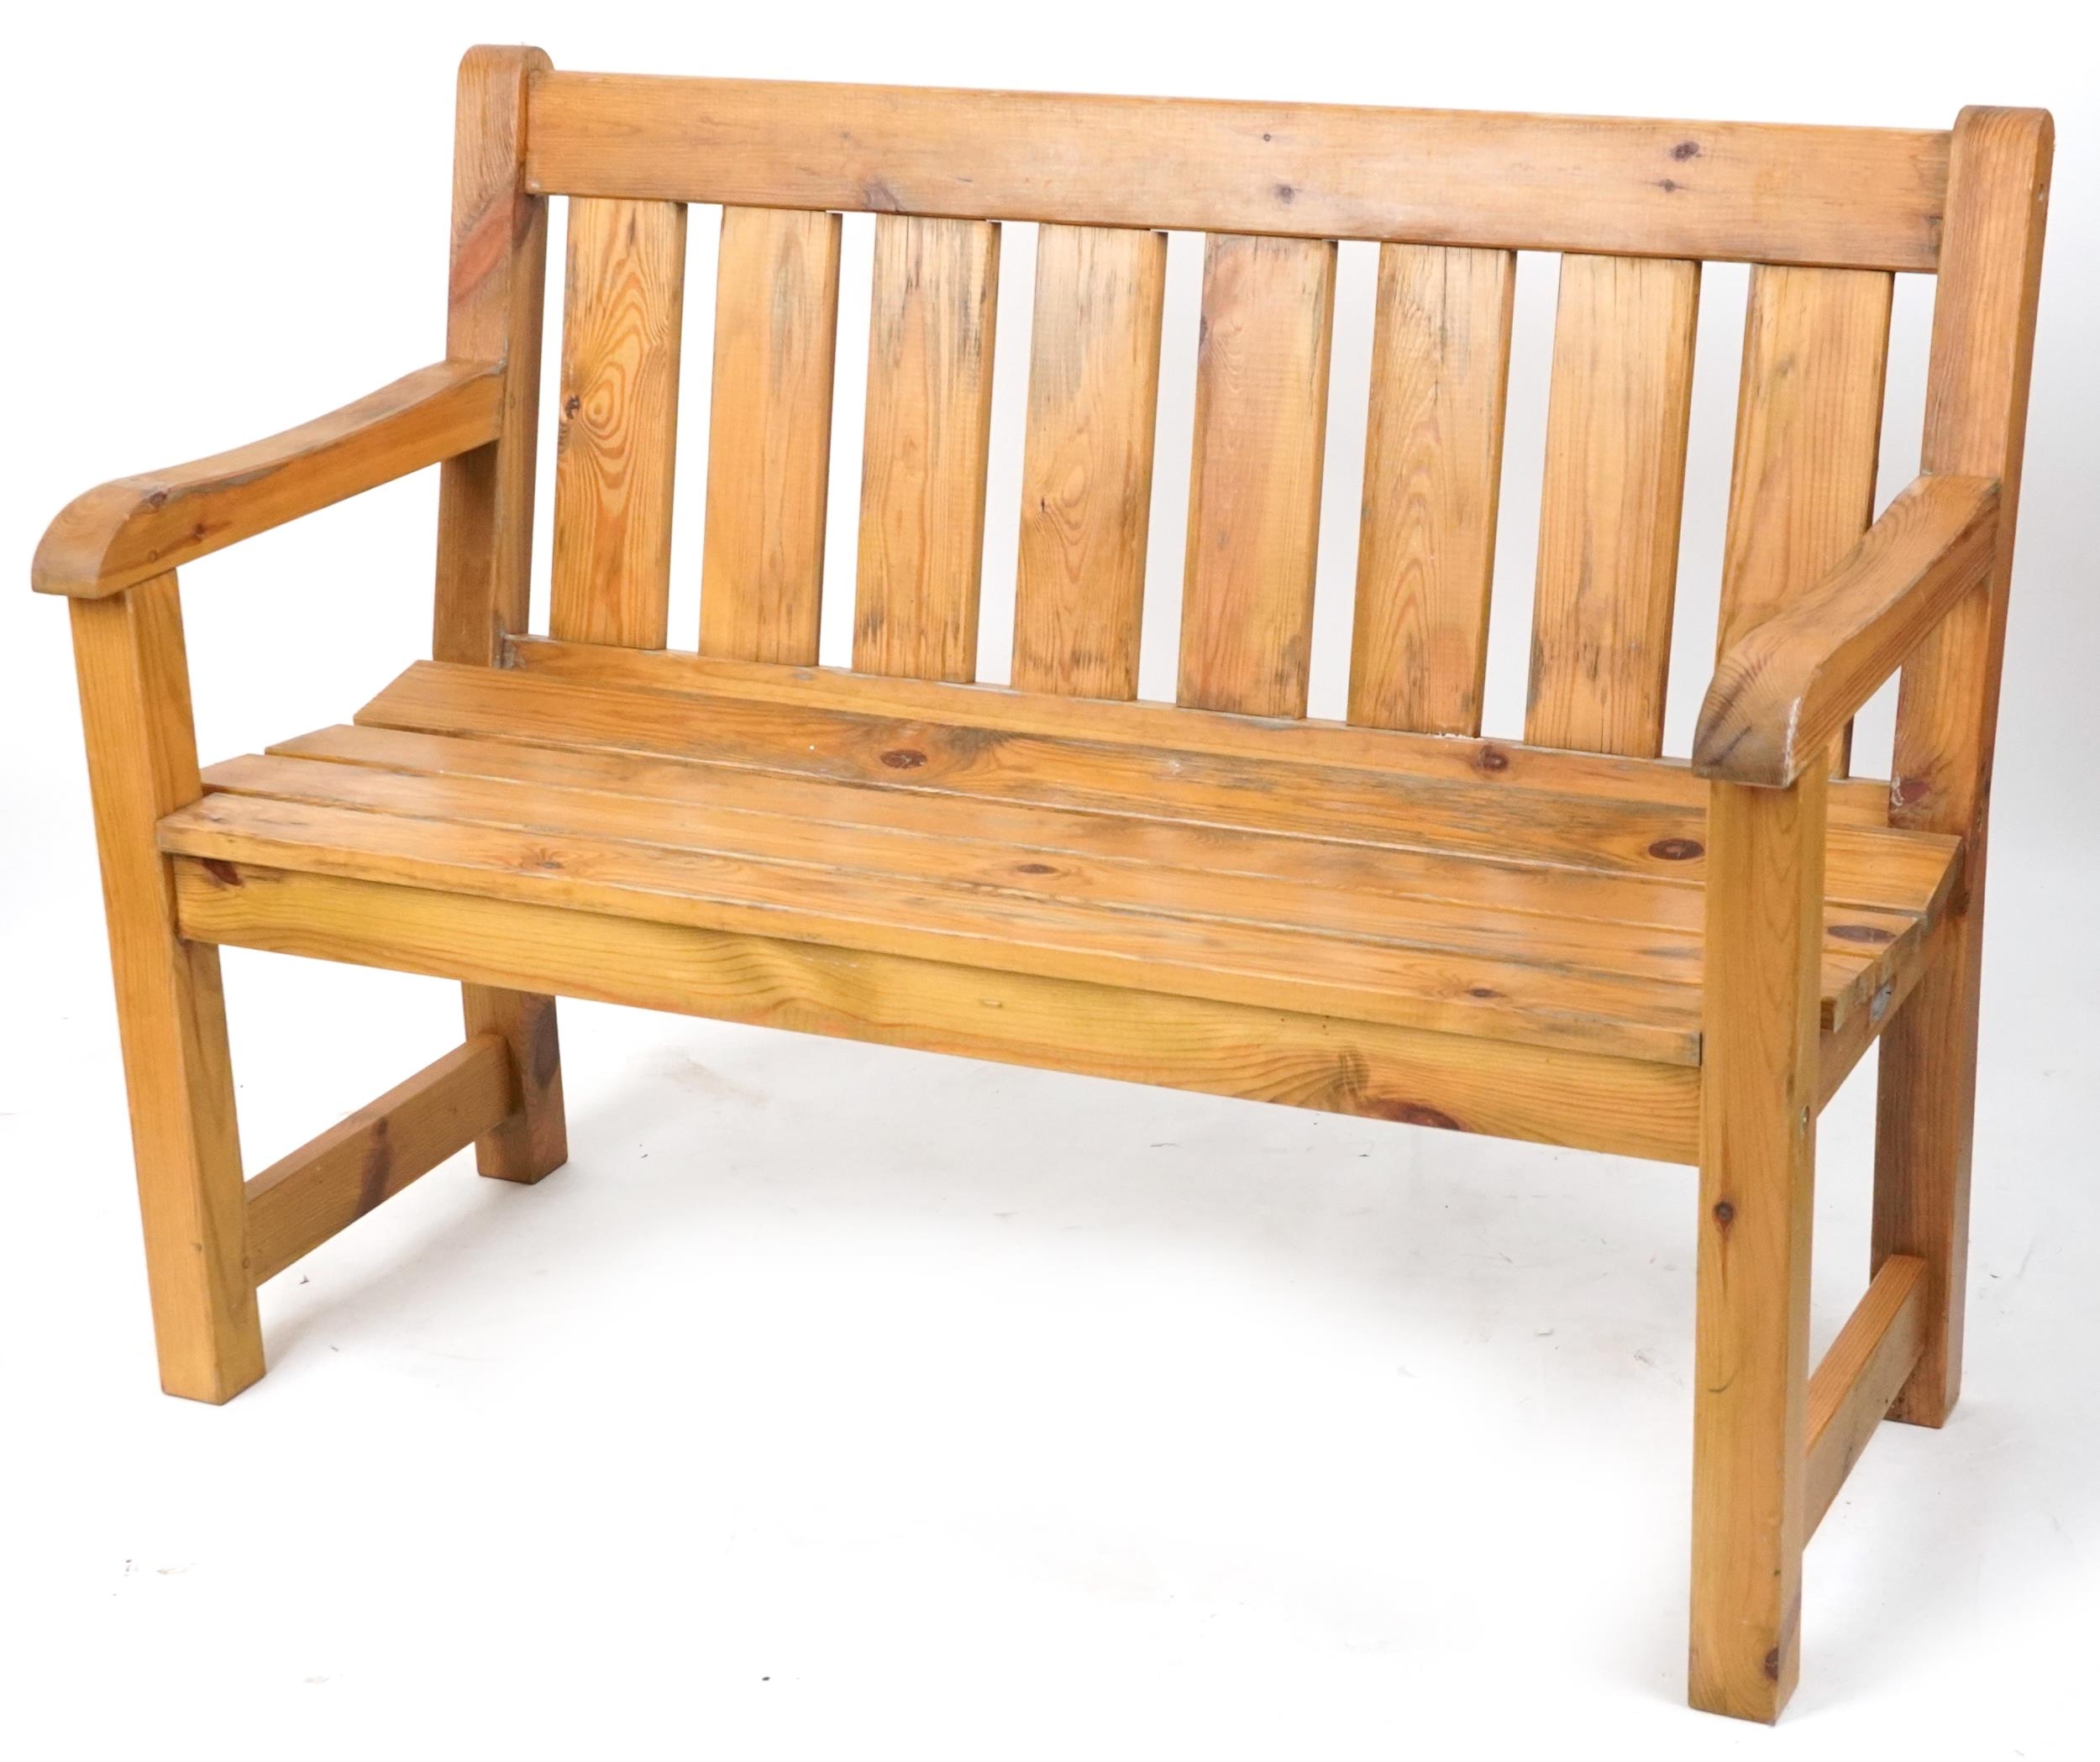 Alexander Rose Pine slatted garden bench, 92.5cm H x 102.5/ 182.5cm W x 59cm D